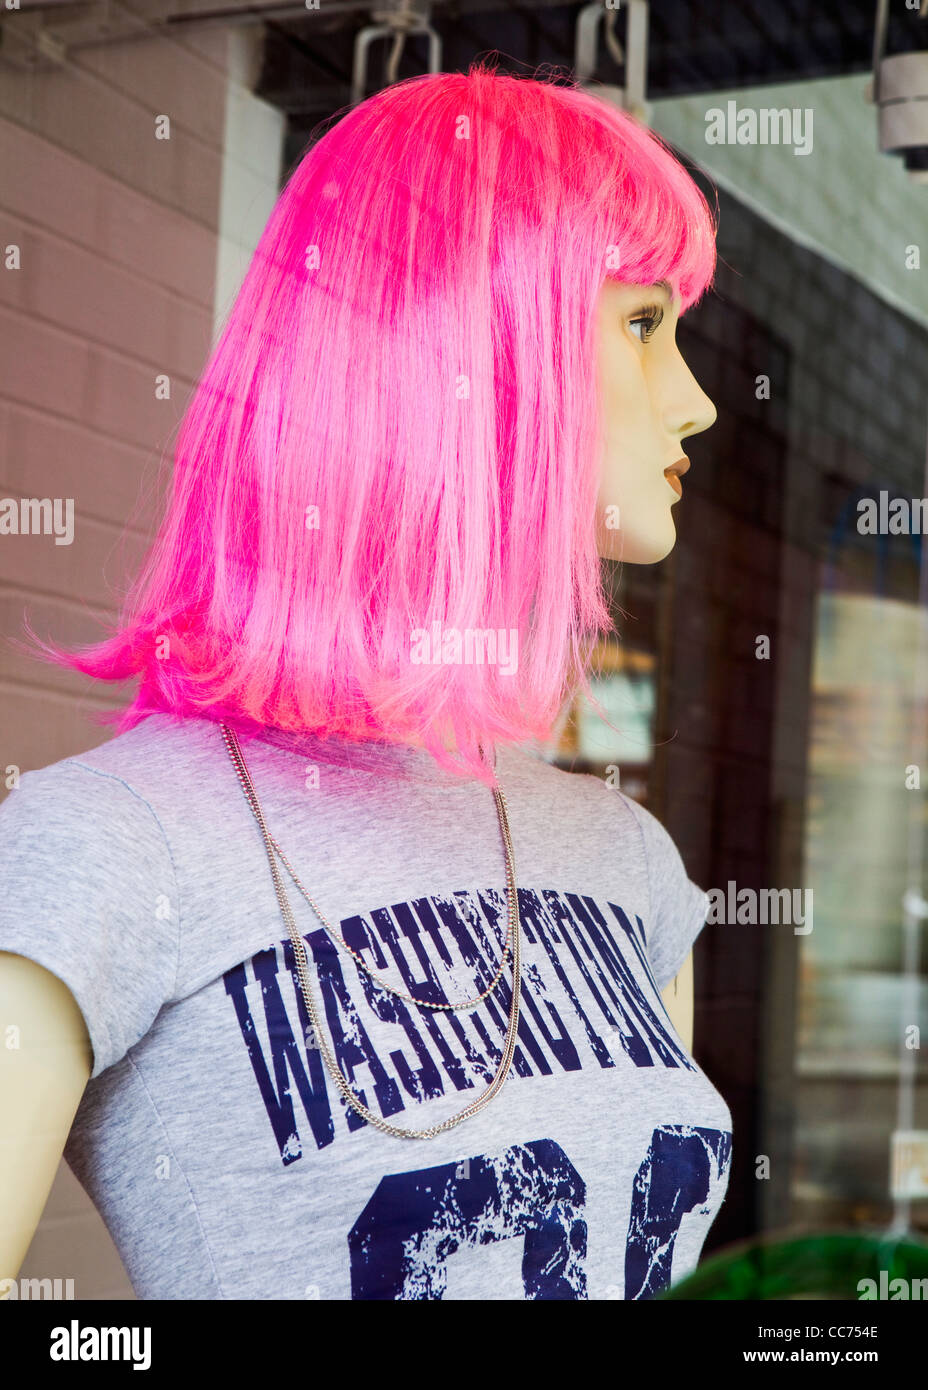 Display manikin wearing pink wig Stock Photo